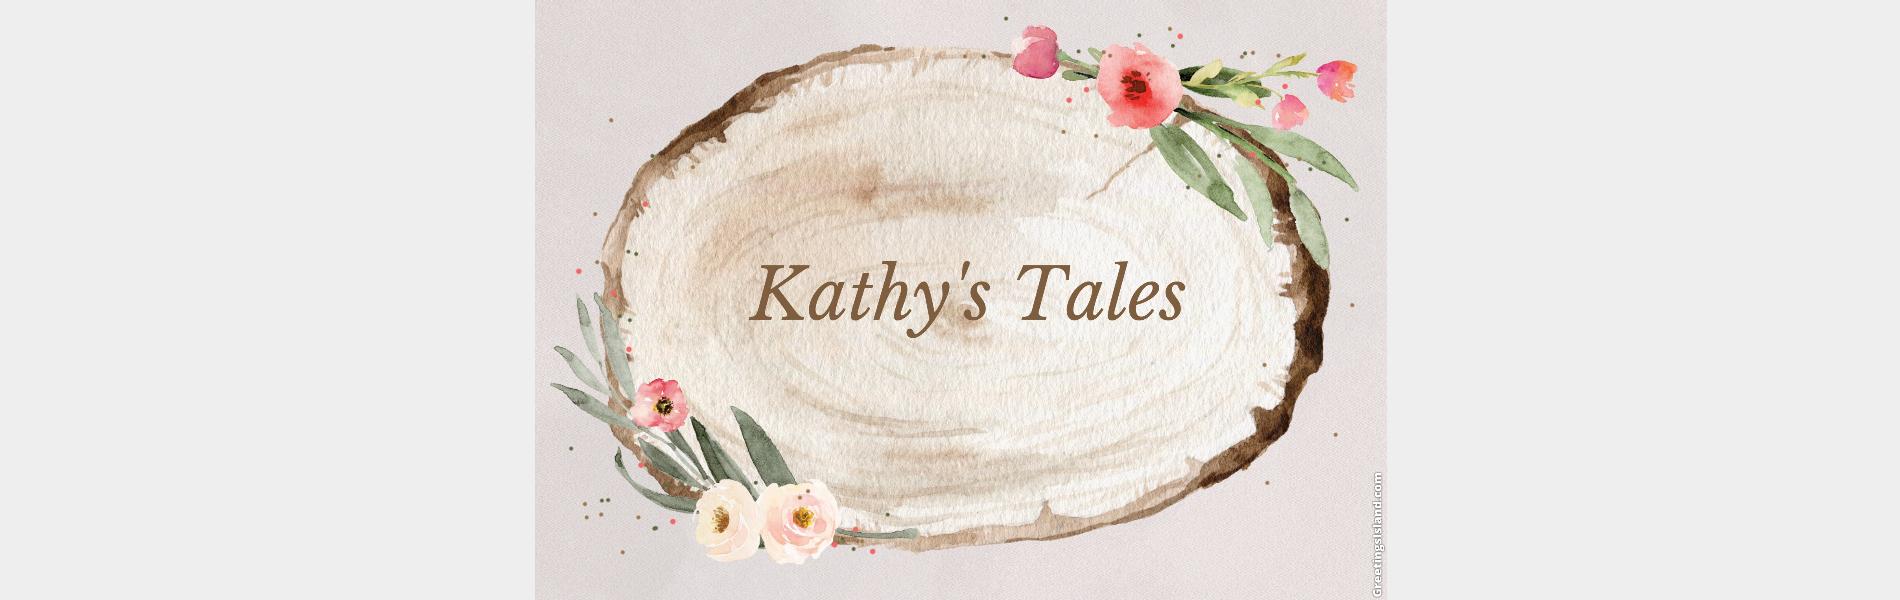 Kathy's Tales